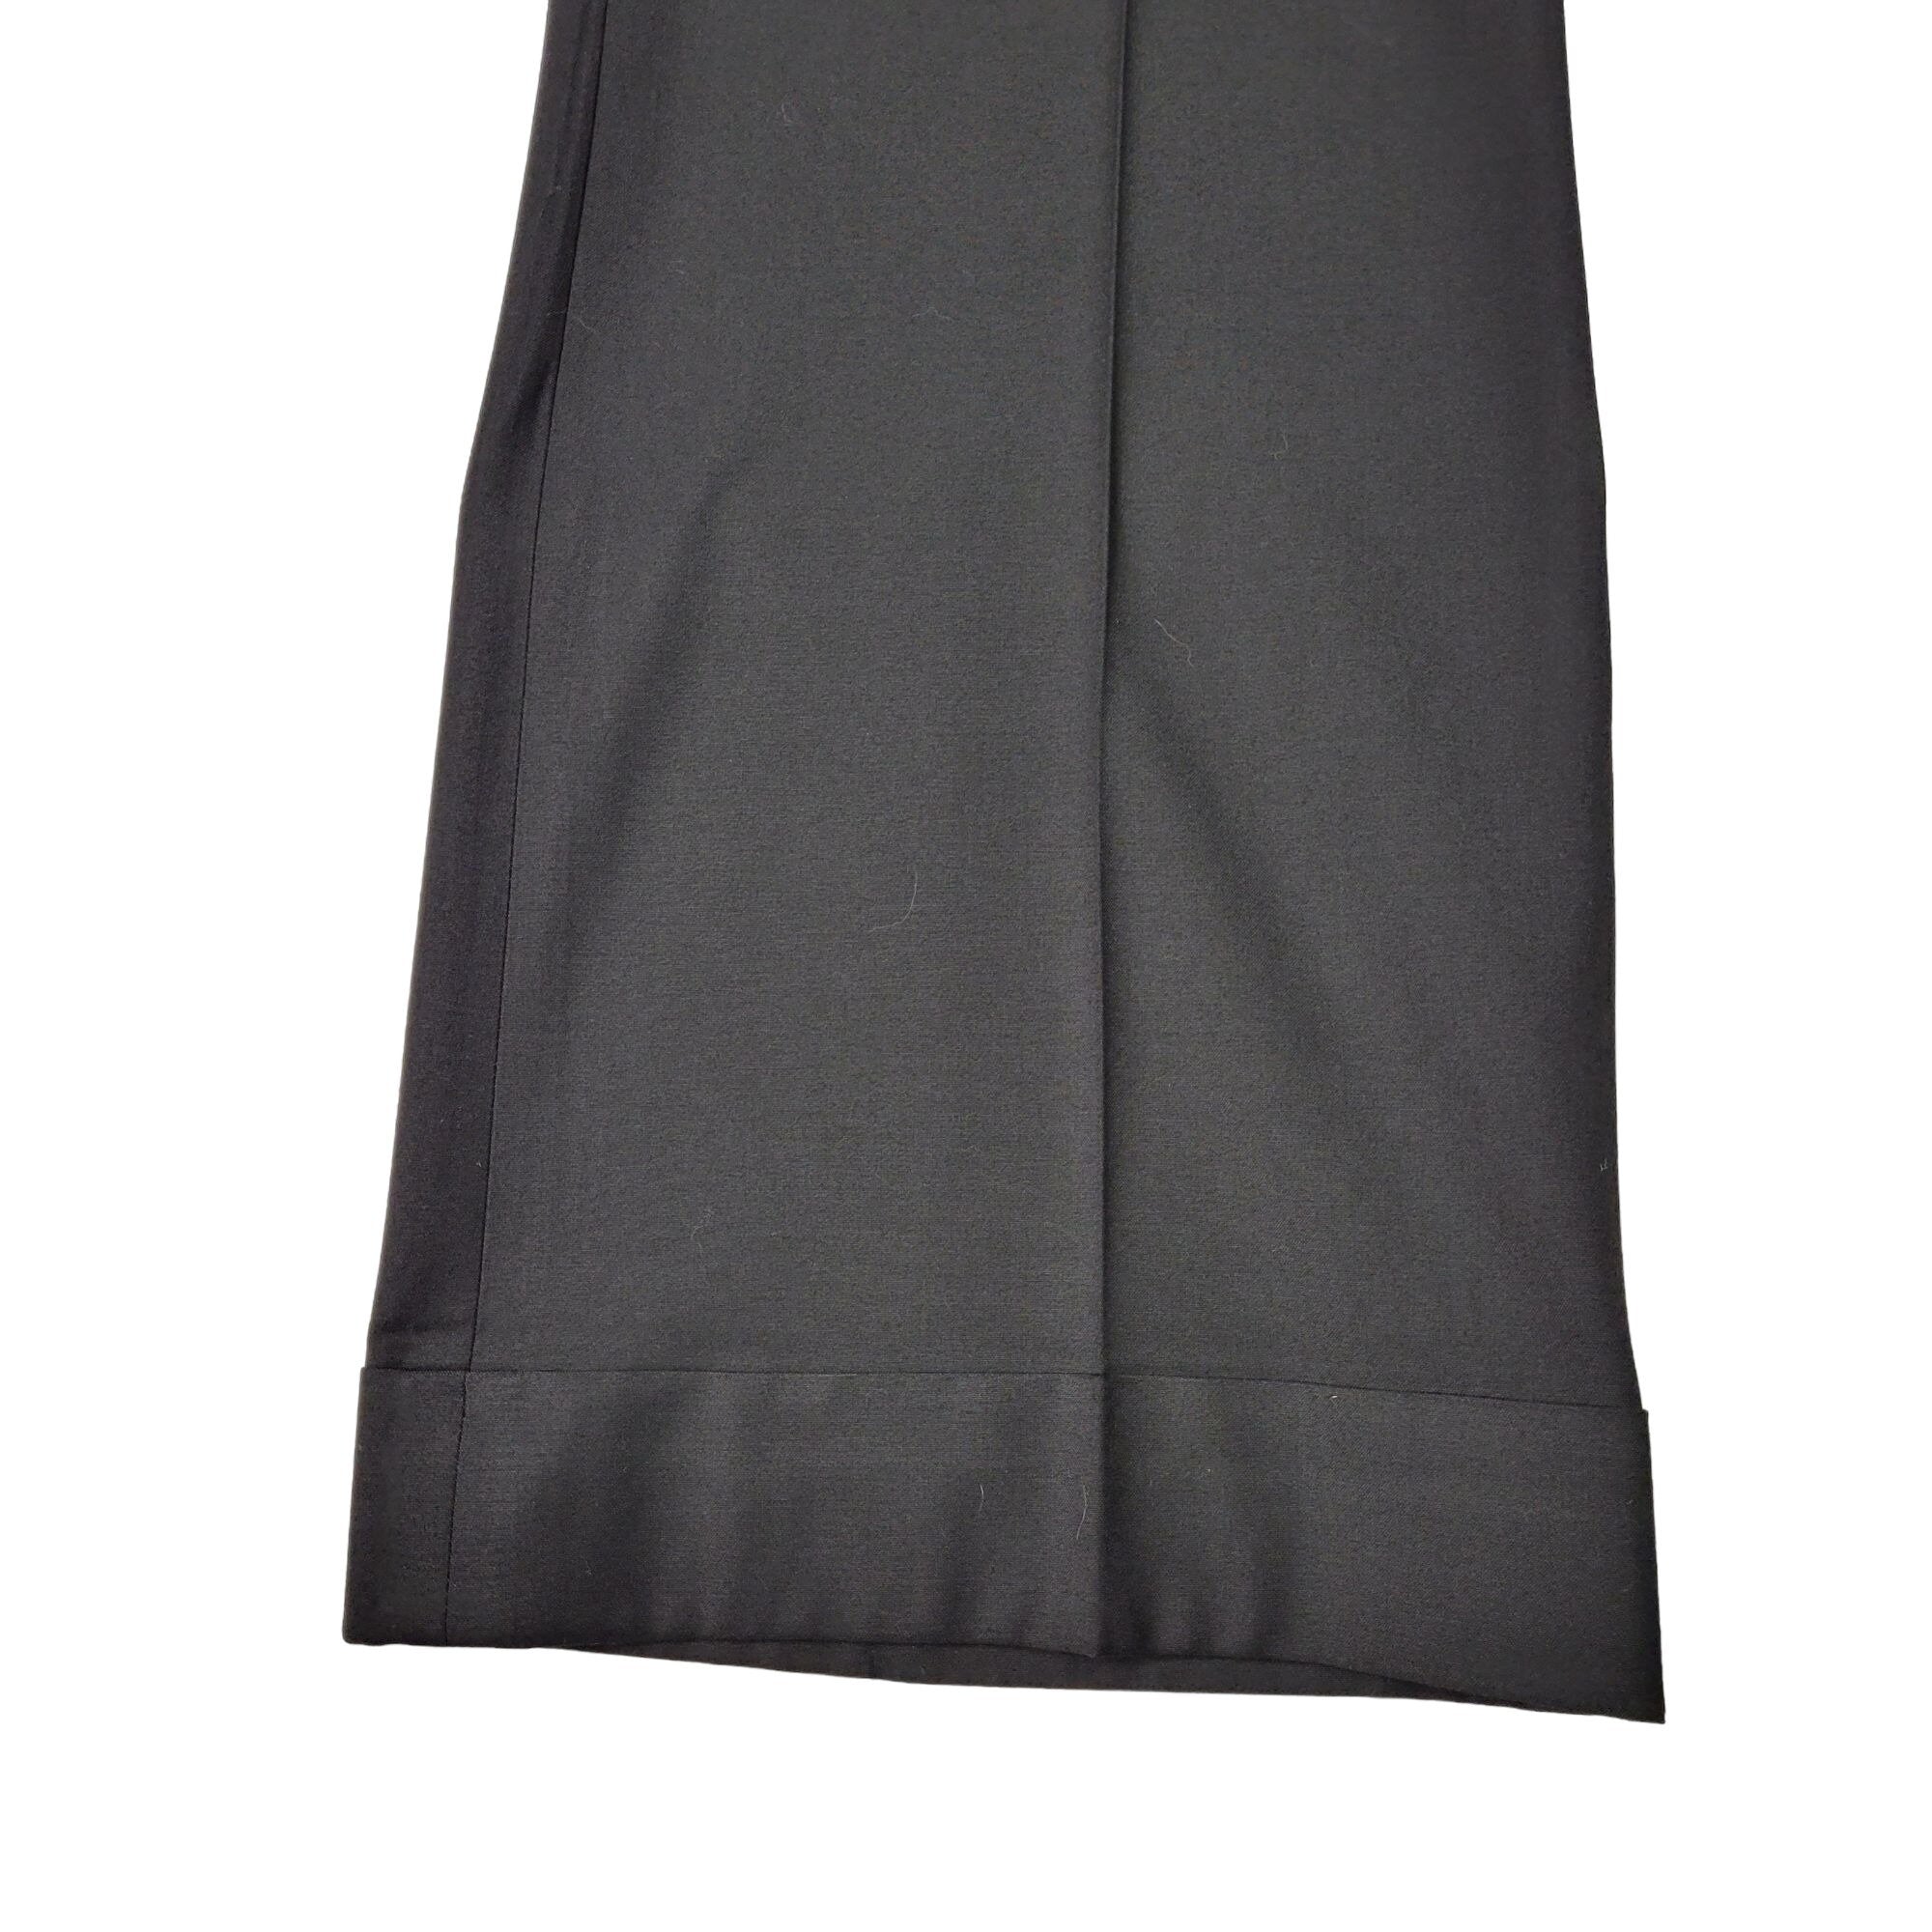 LOFT Women's Black, Mid Waist, Bootcut, Relaxed Dress Pants, Size 4